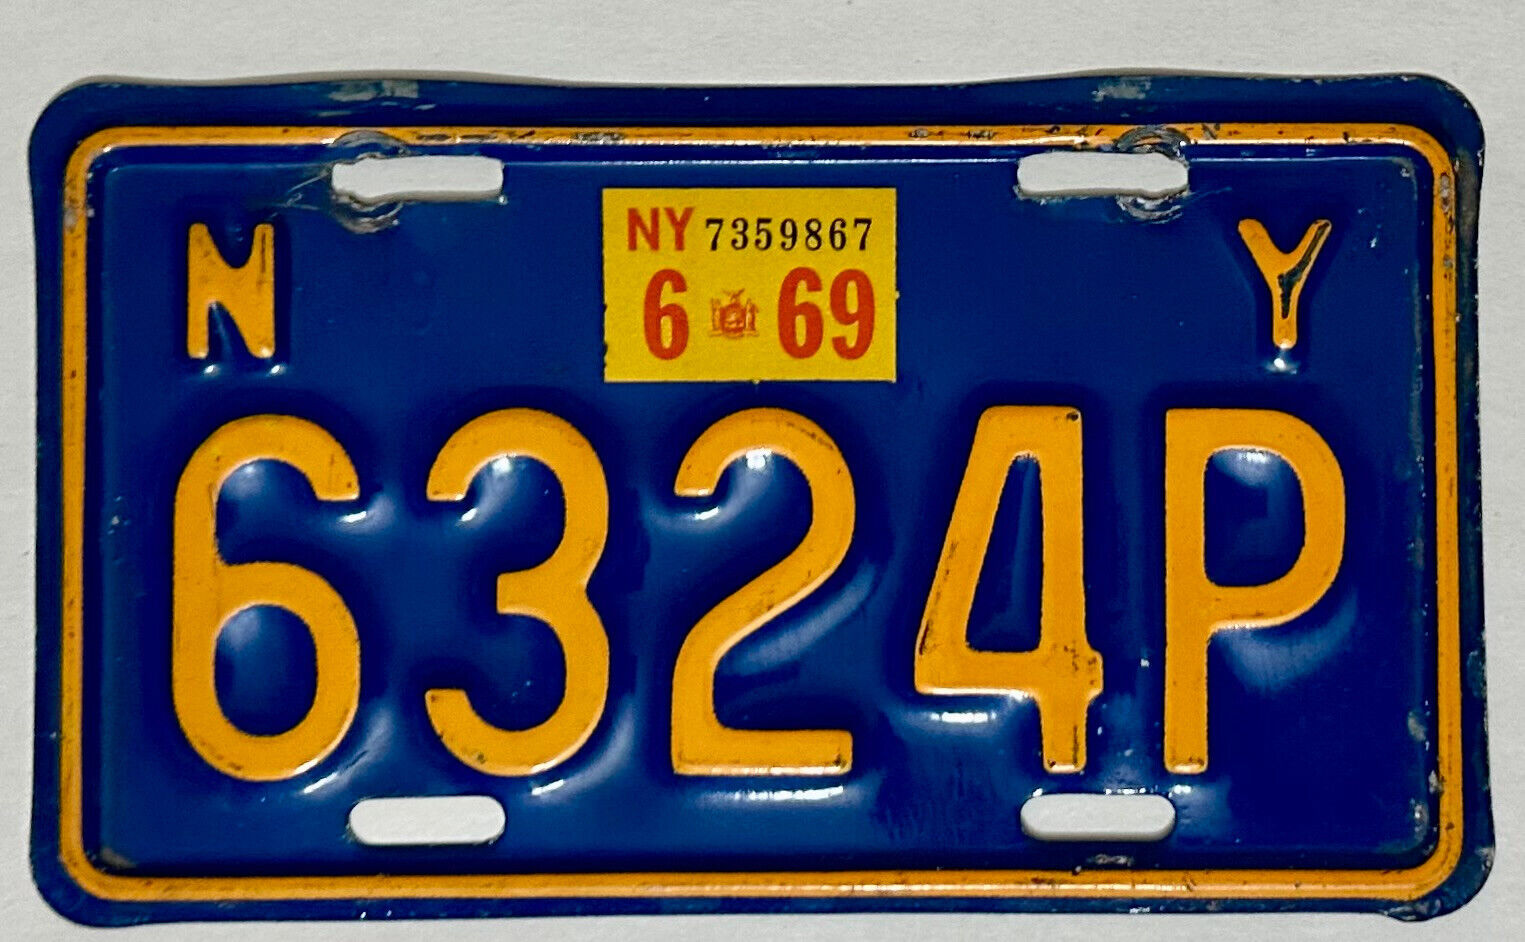 1969 NEW YORK Motorcycle License Plate - 1966-1973 Series - #6324P